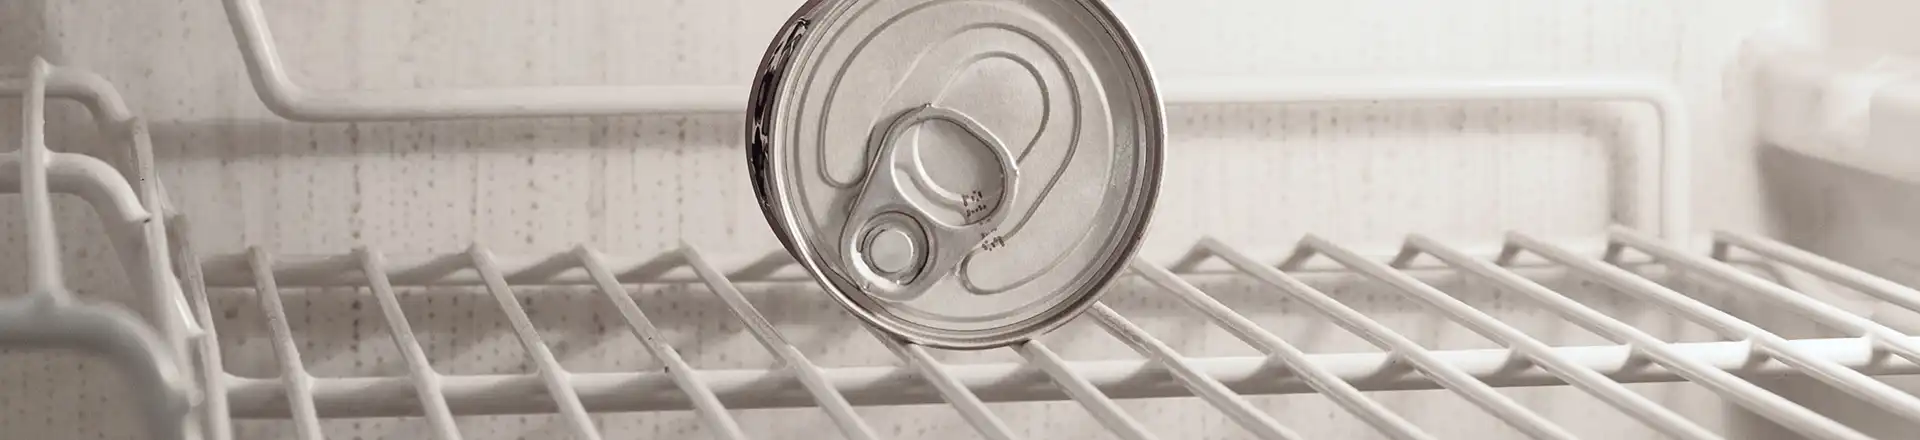 A can inside a fridge